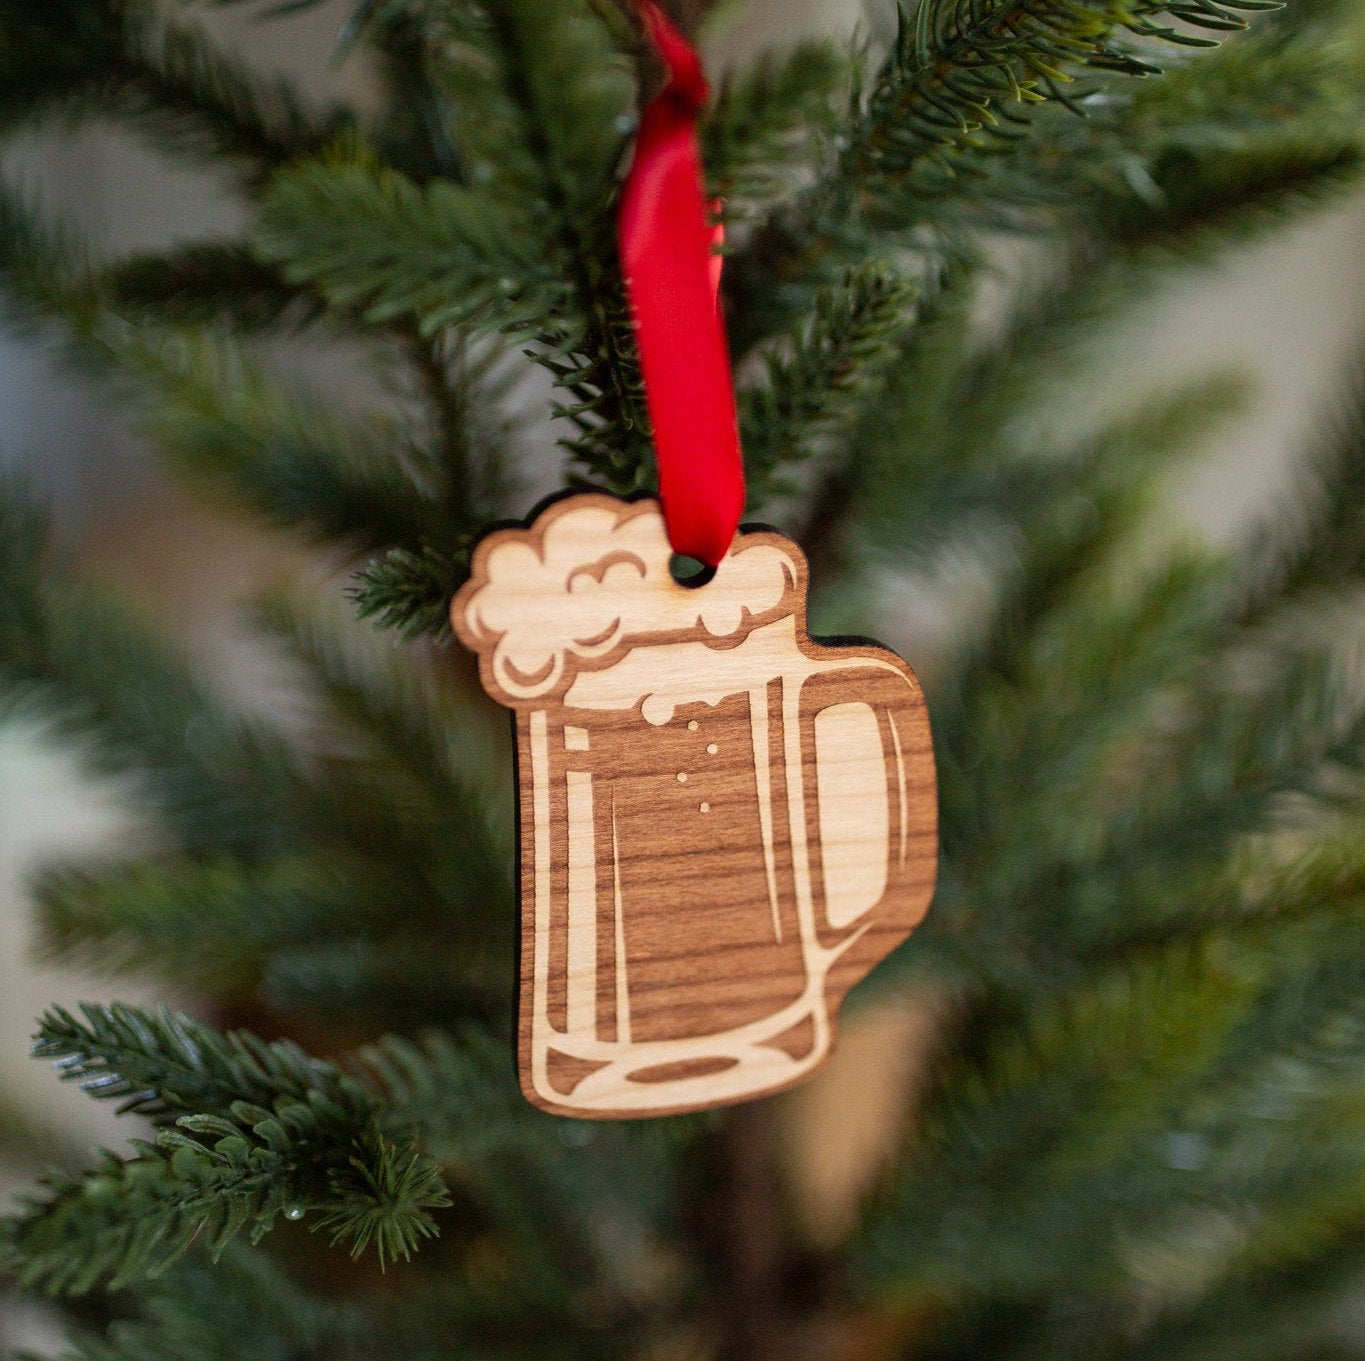 Make It A Triple #Tripletmom- Engraved Wooden Funny Christmas Ornament  Charm, Funny Christmas Gift For Mom, Funny Holiday Ornament For Mom – 3C  Etching LTD